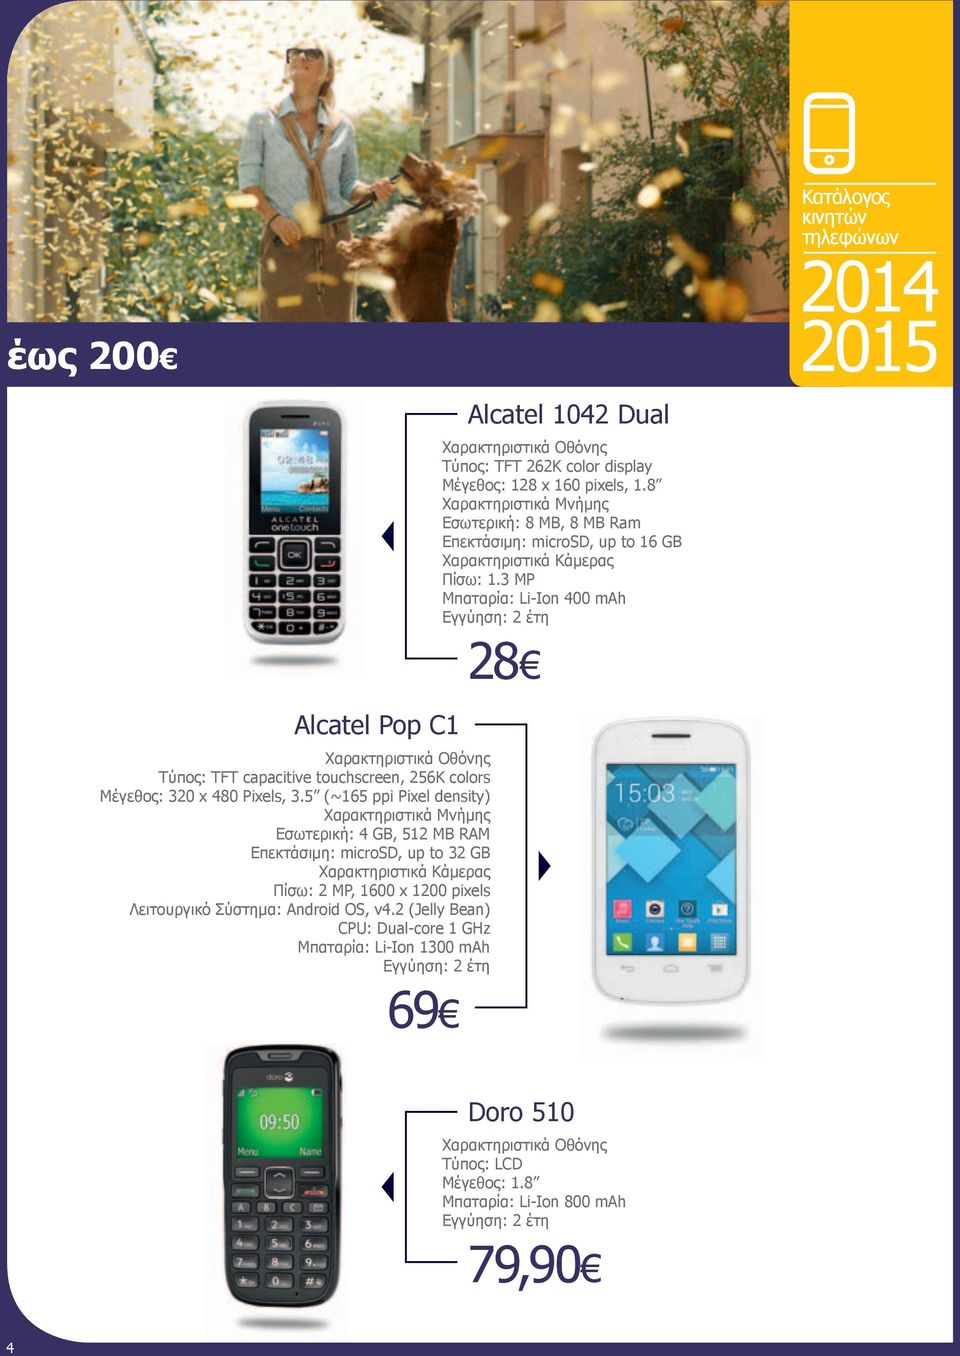 3 MP Μπαταρία: Li-Ion 400 mah 28 Κατάλογος κινητών τηλεφώνων 2014 2015 Alcatel Pop C1 Τύπος: TFT capacitive touchscreen, 256K colors Μέγεθος: 320 x